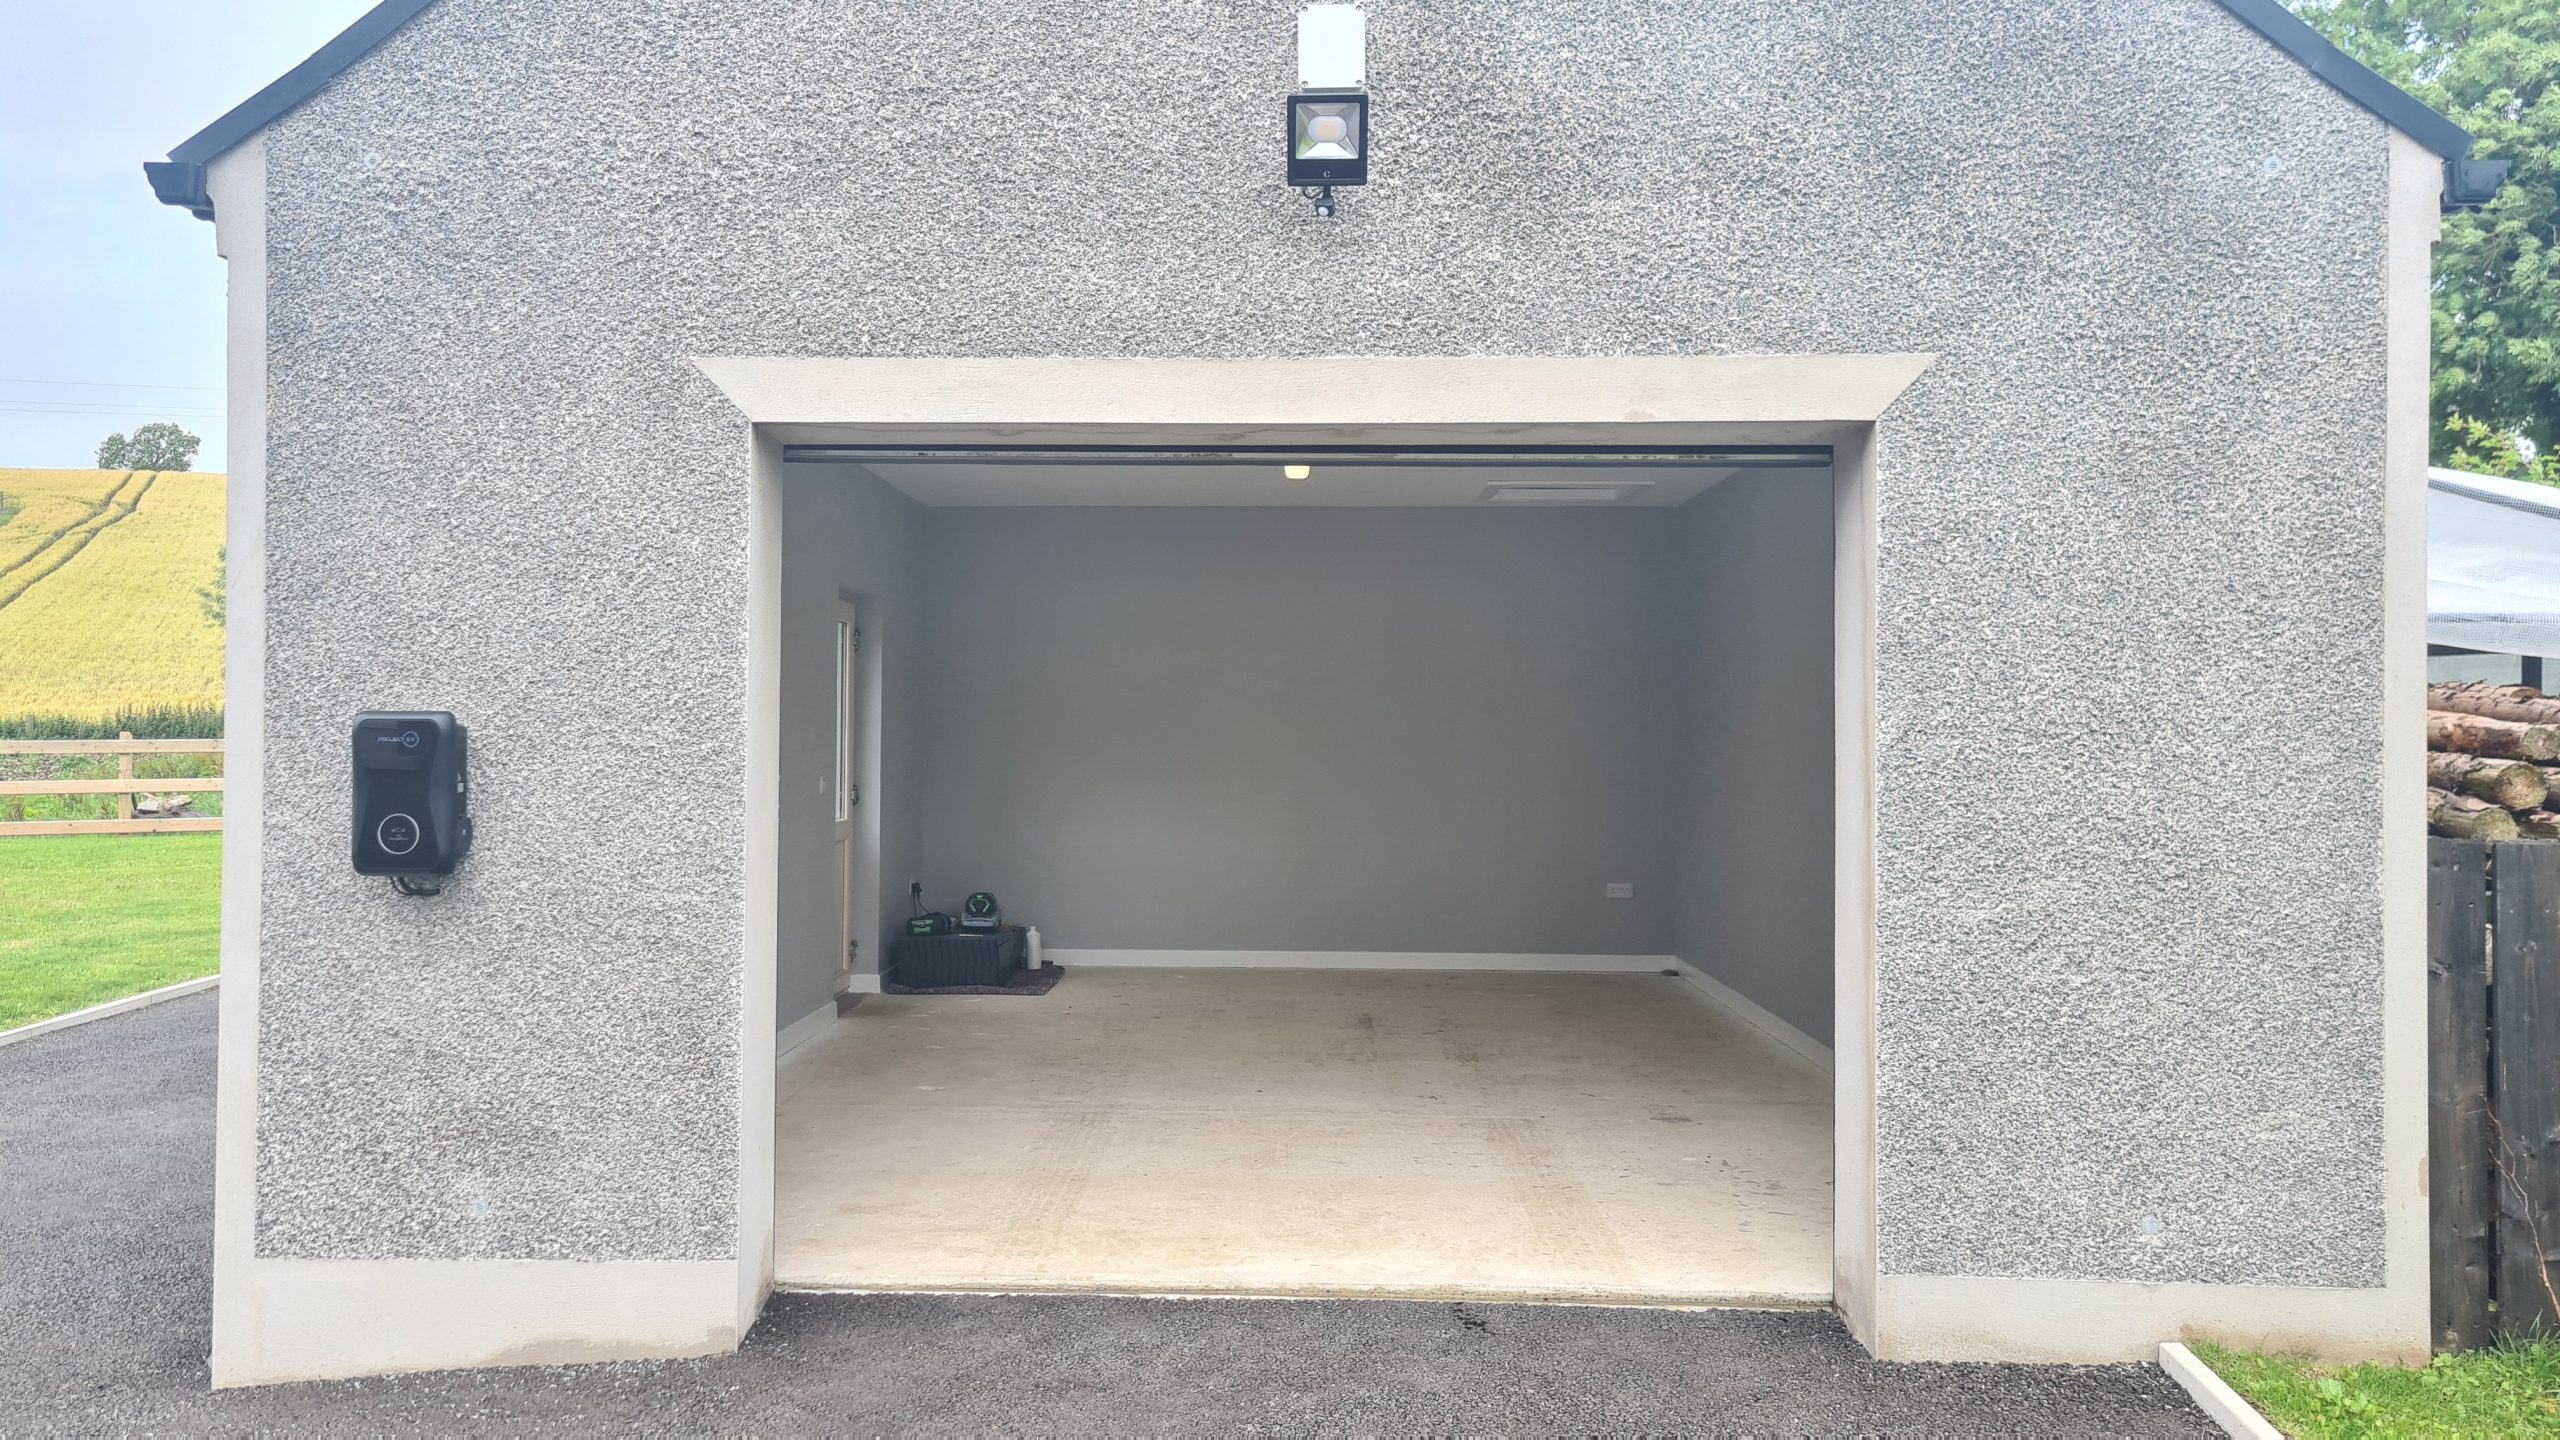 empty garage with concrete floor